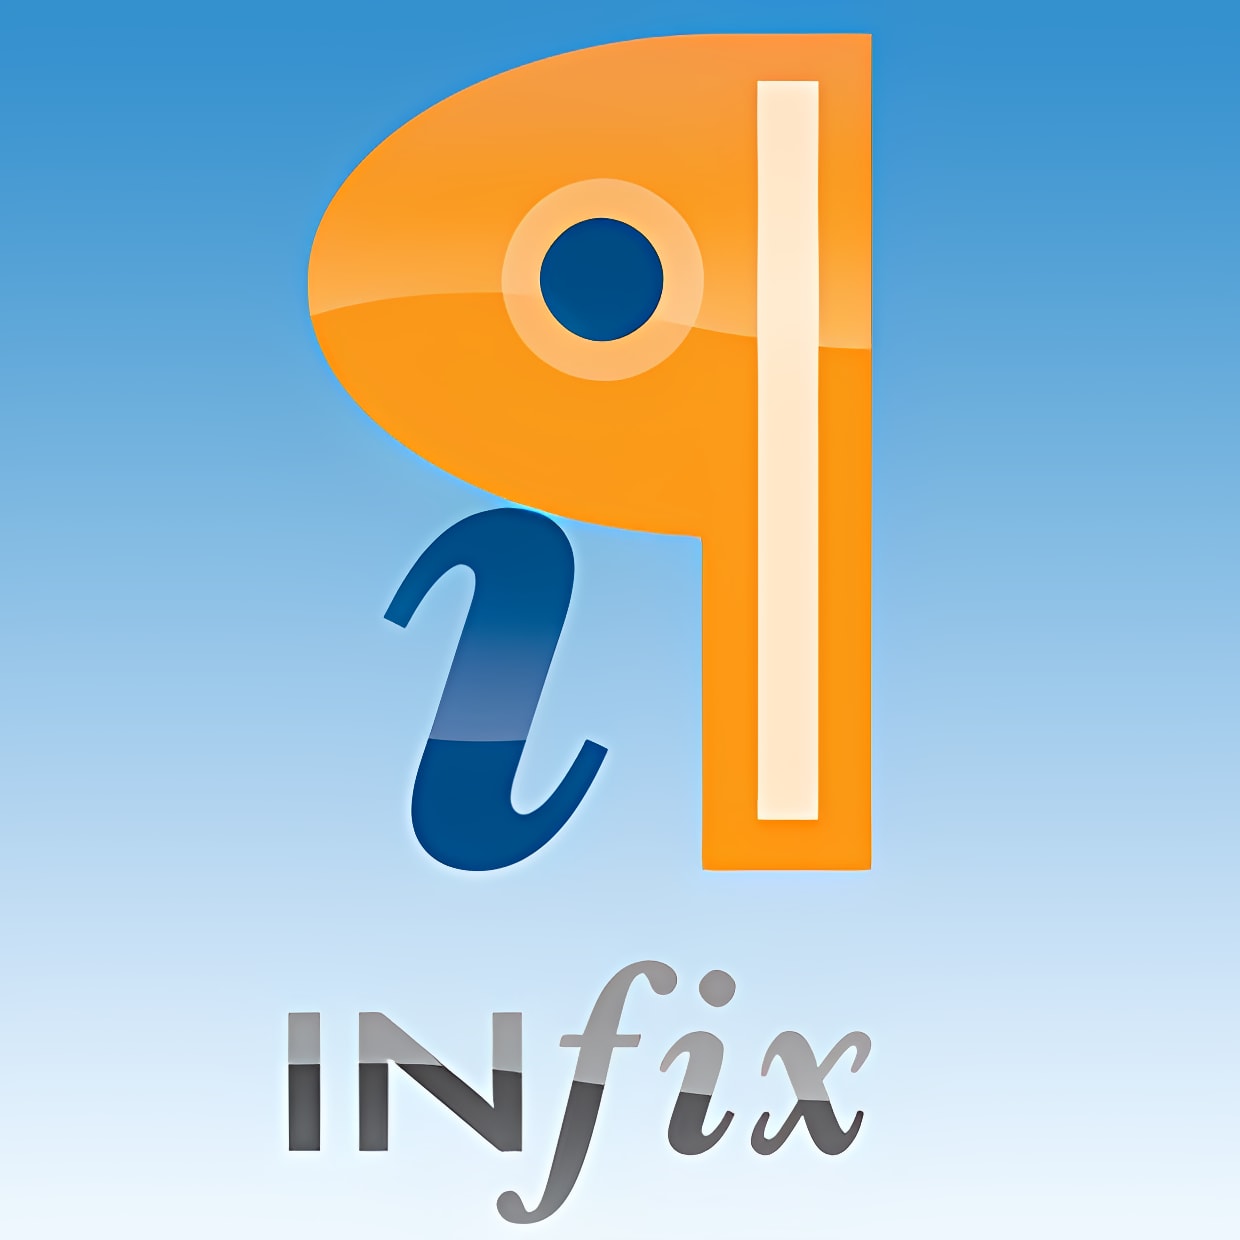 infix editor